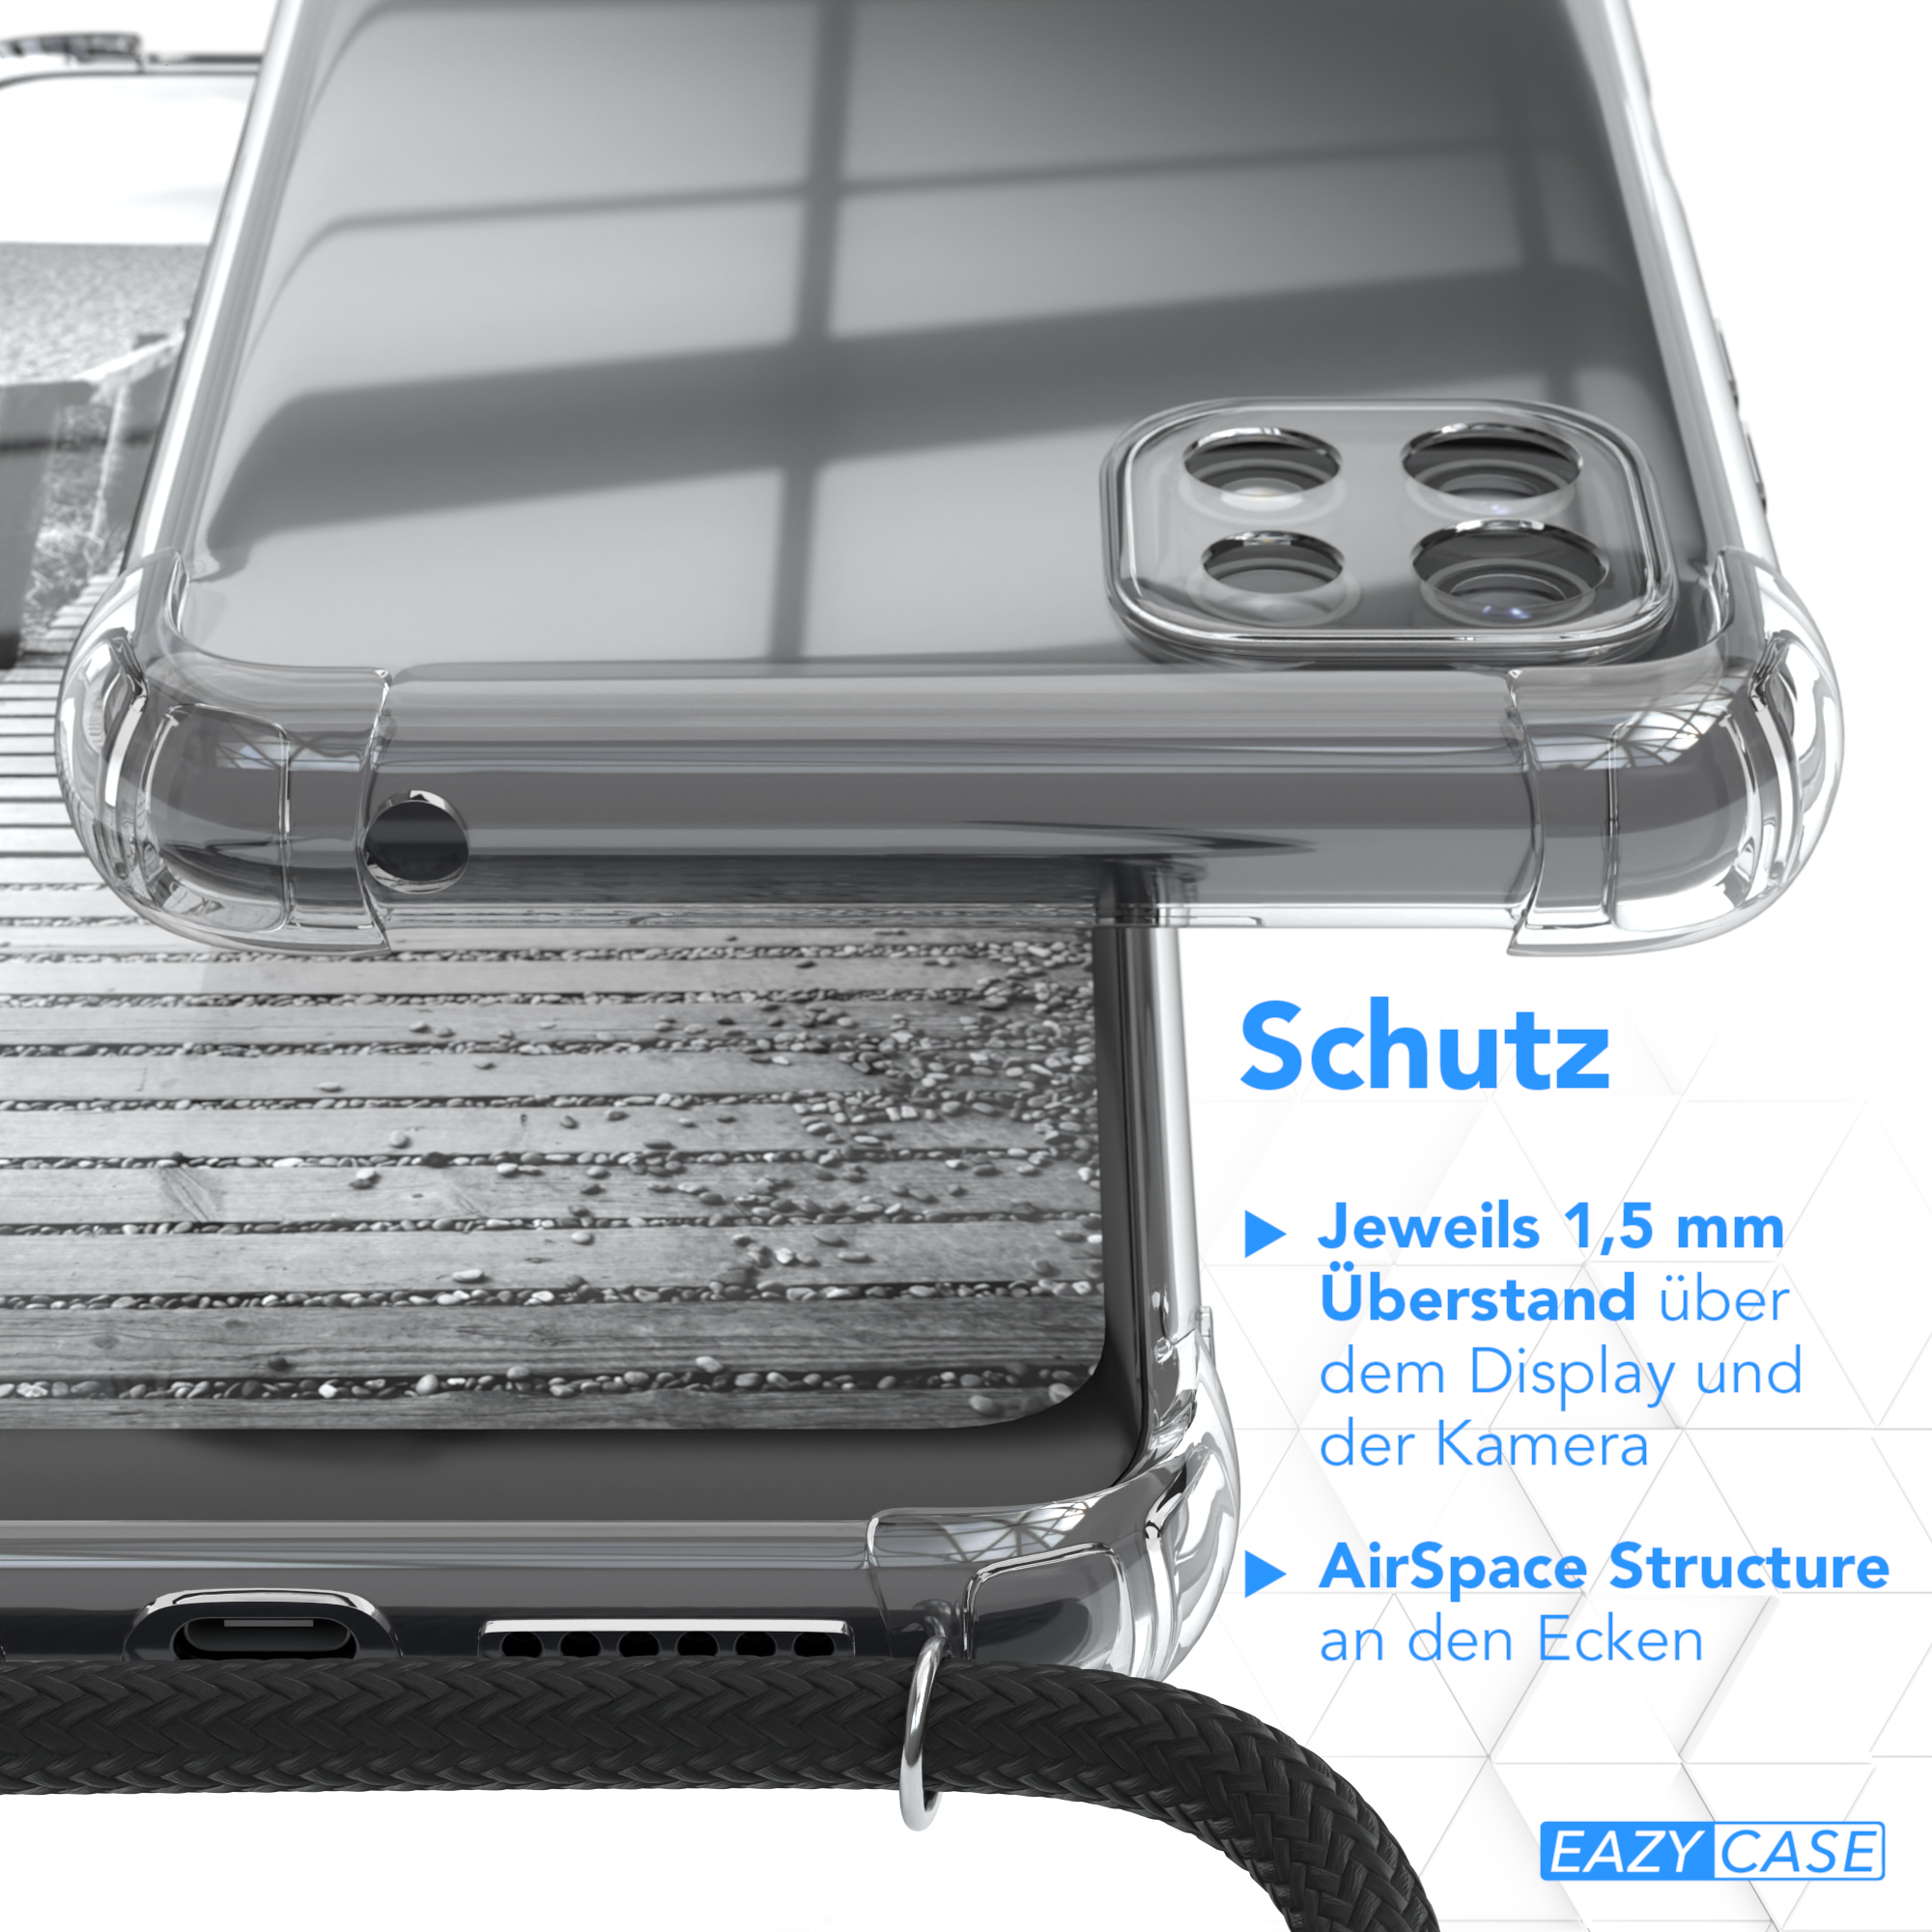 CASE extra Silber A22 EAZY Kordel Schwarz, 5G, + Samsung, Metall Umhängetasche, Handykette Galaxy